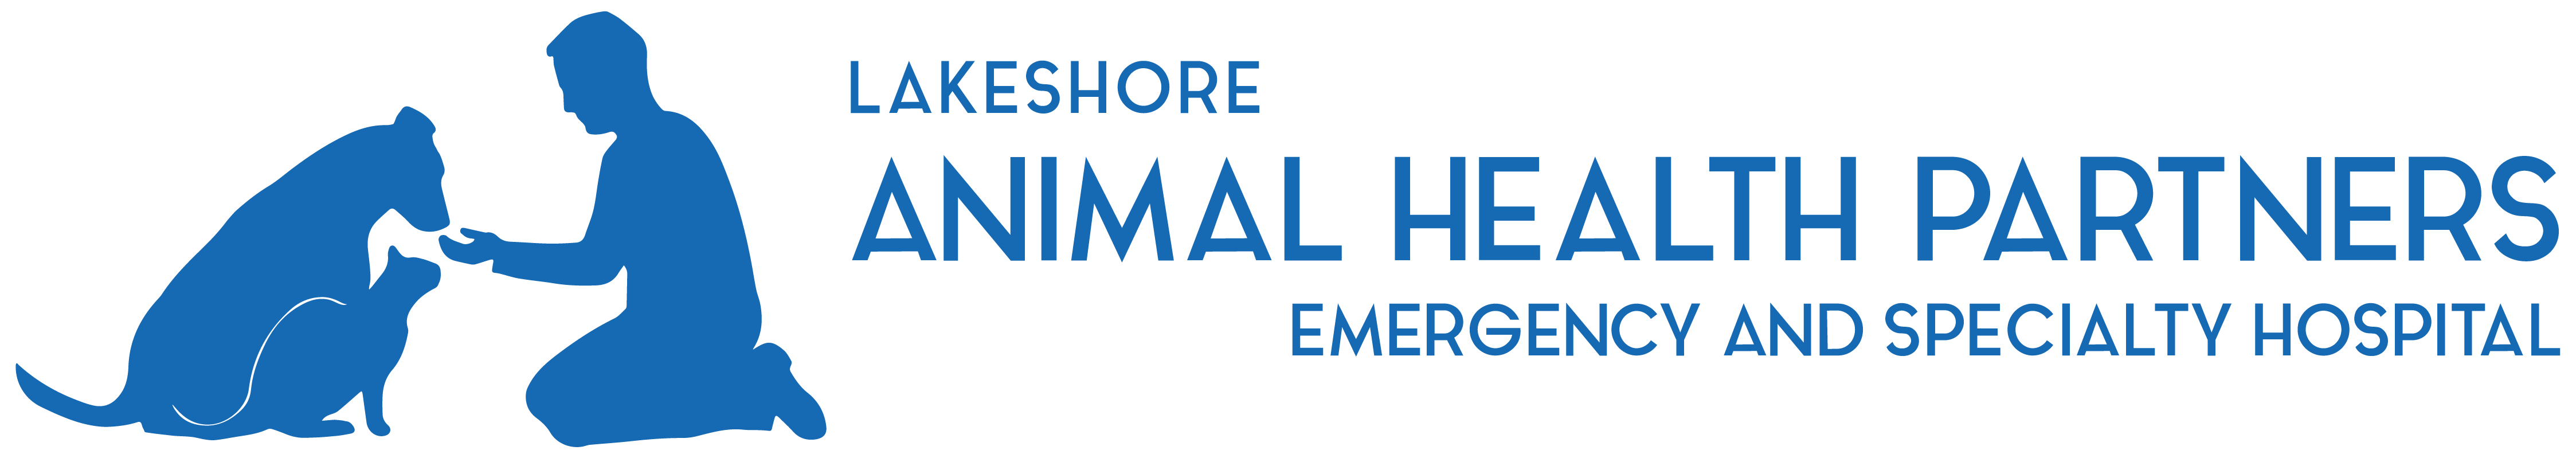 Lakeshore Animal Health Partners